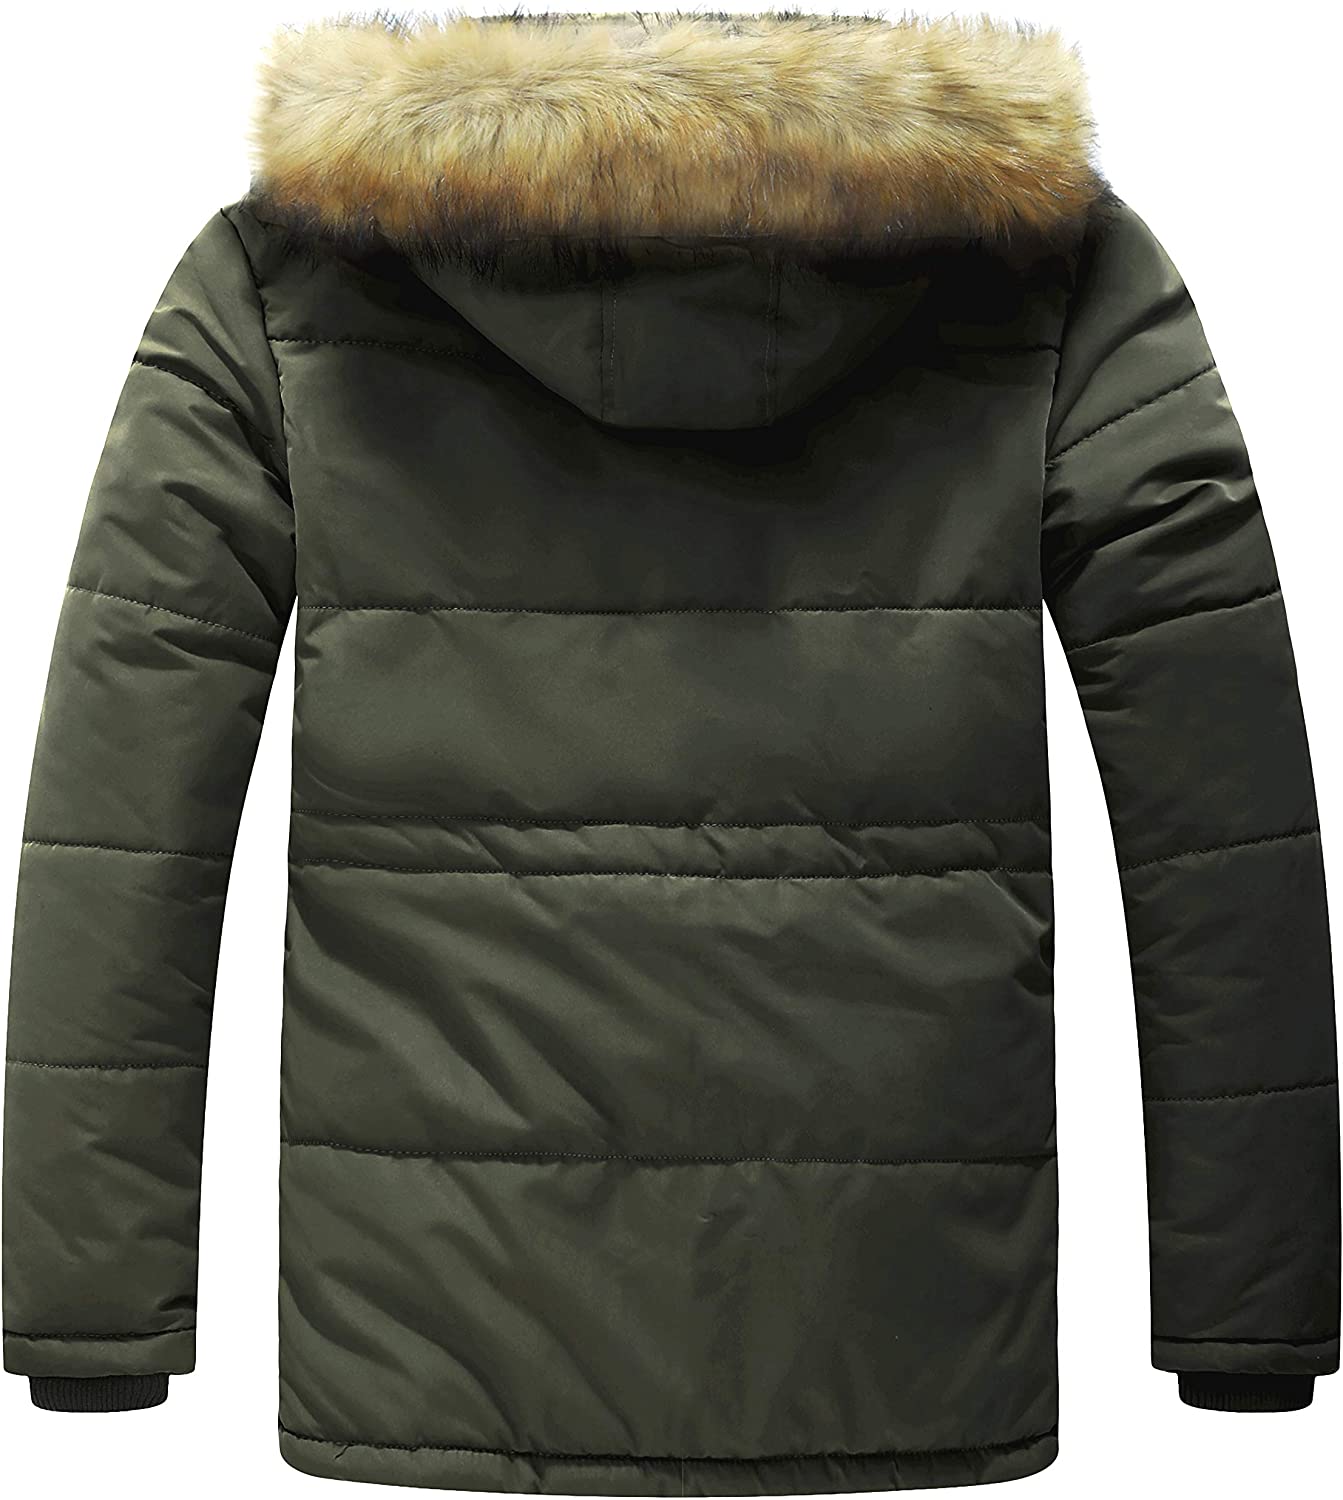 WenVen Men's Hooded Warm Coat Winter Parka Jacket | eBay